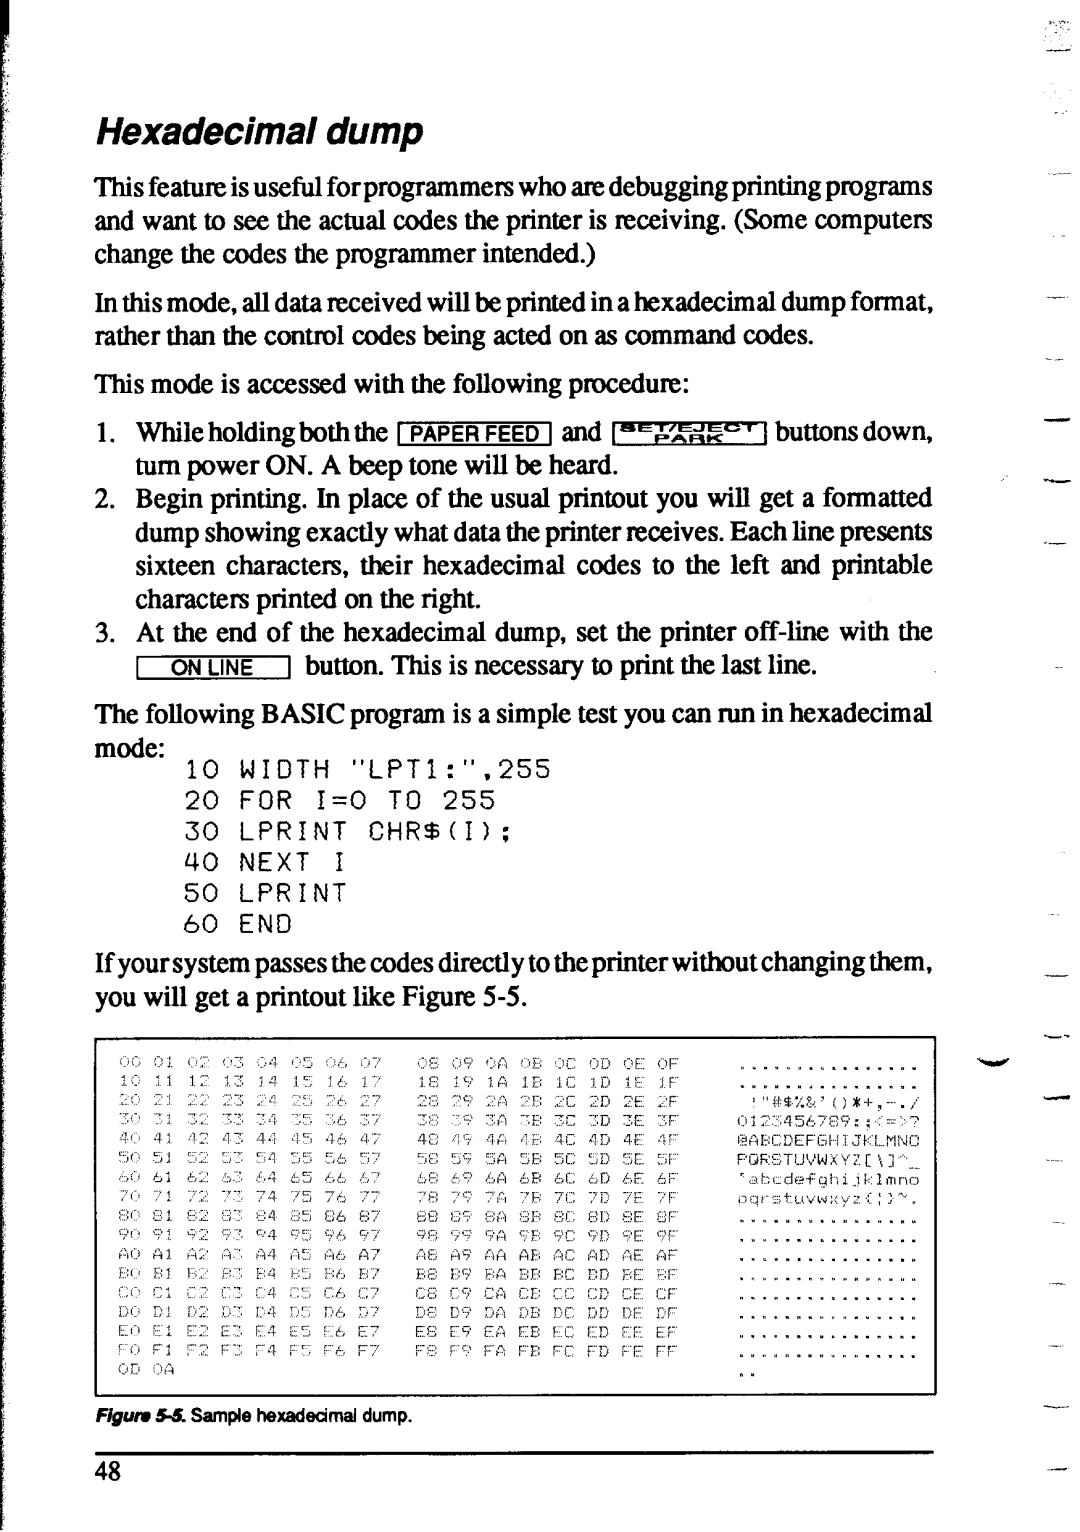 Star Micronics XR-1020, XR-1520 manual Hexadecimal dump 